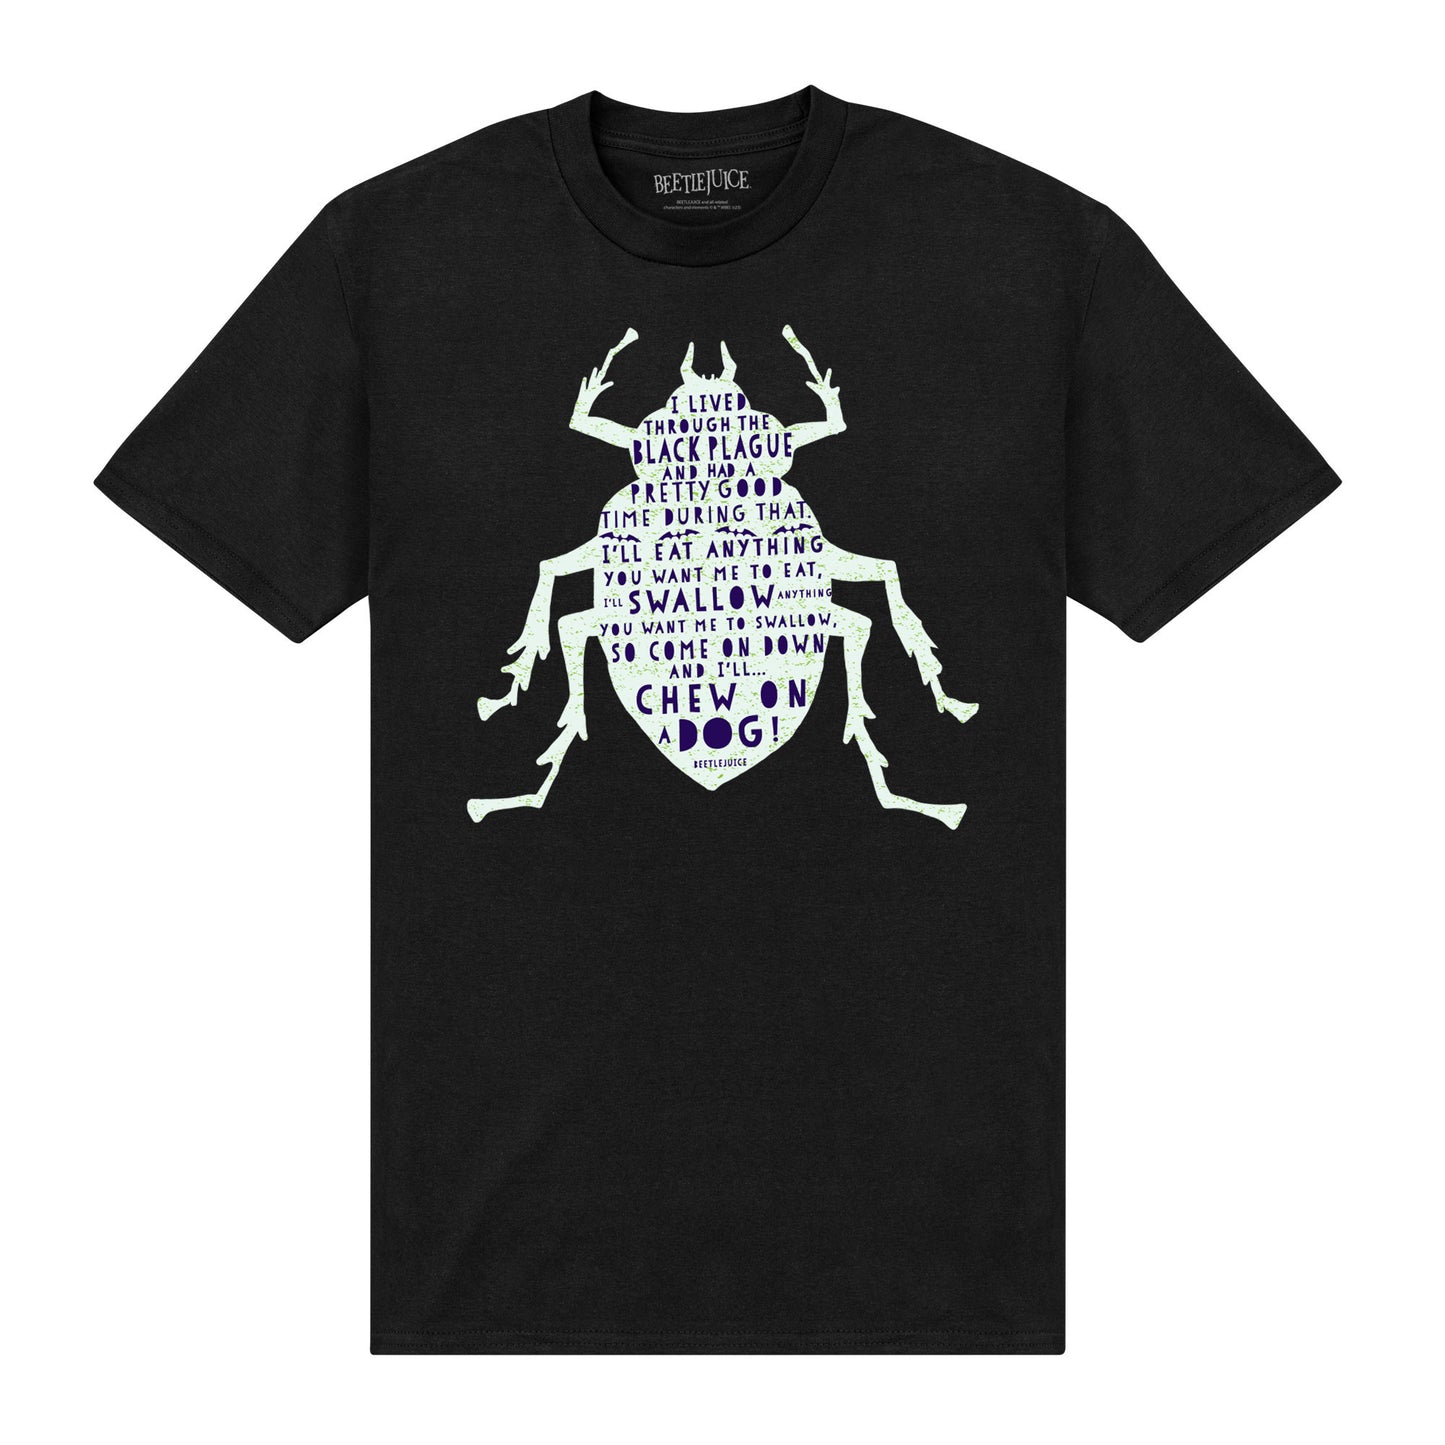 Beetlejuice Beetle T-Shirt